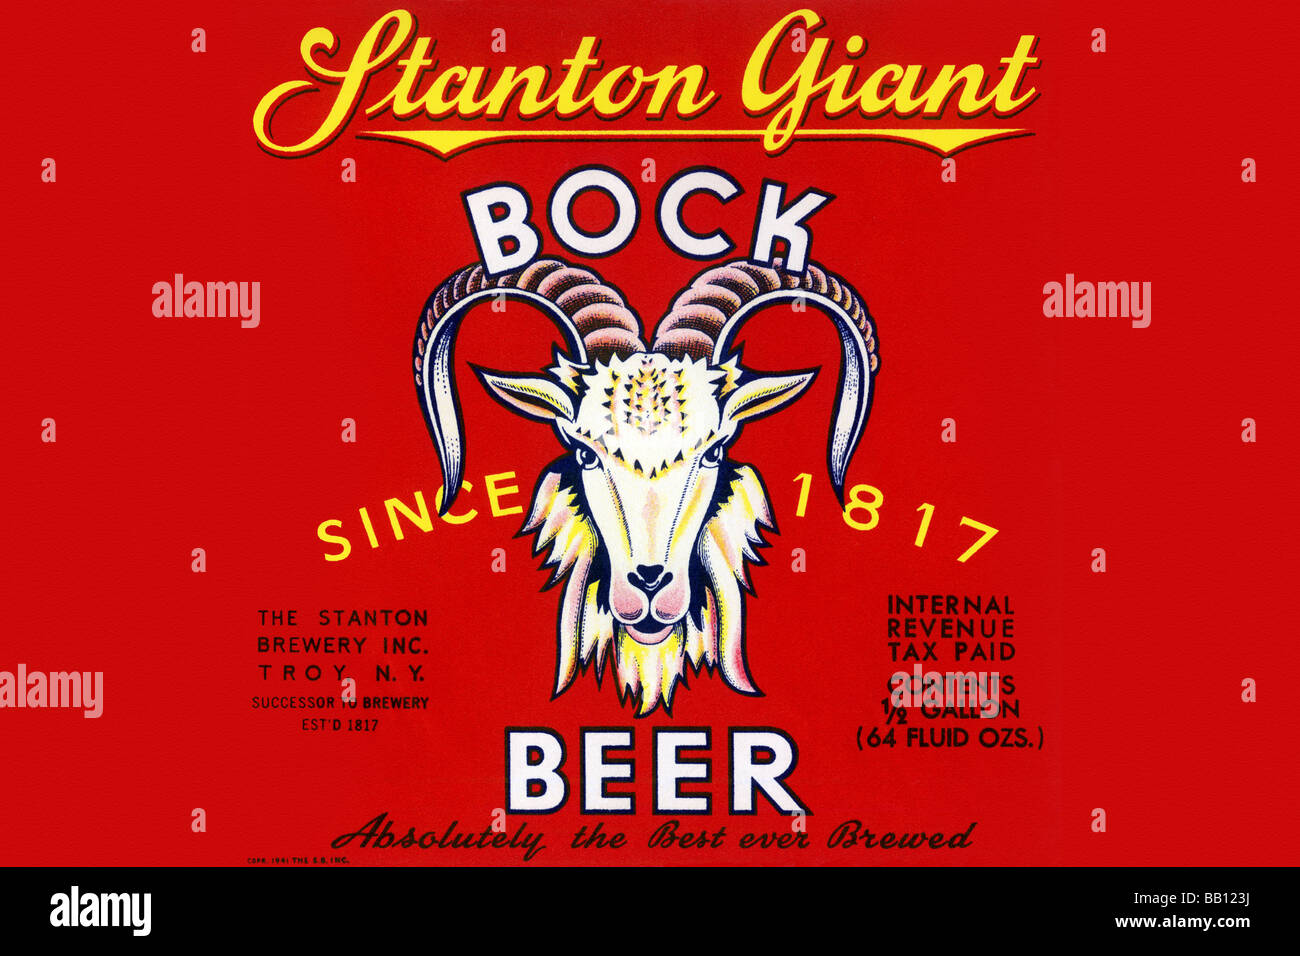 Stanton Giant Bock Beer Stock Photo